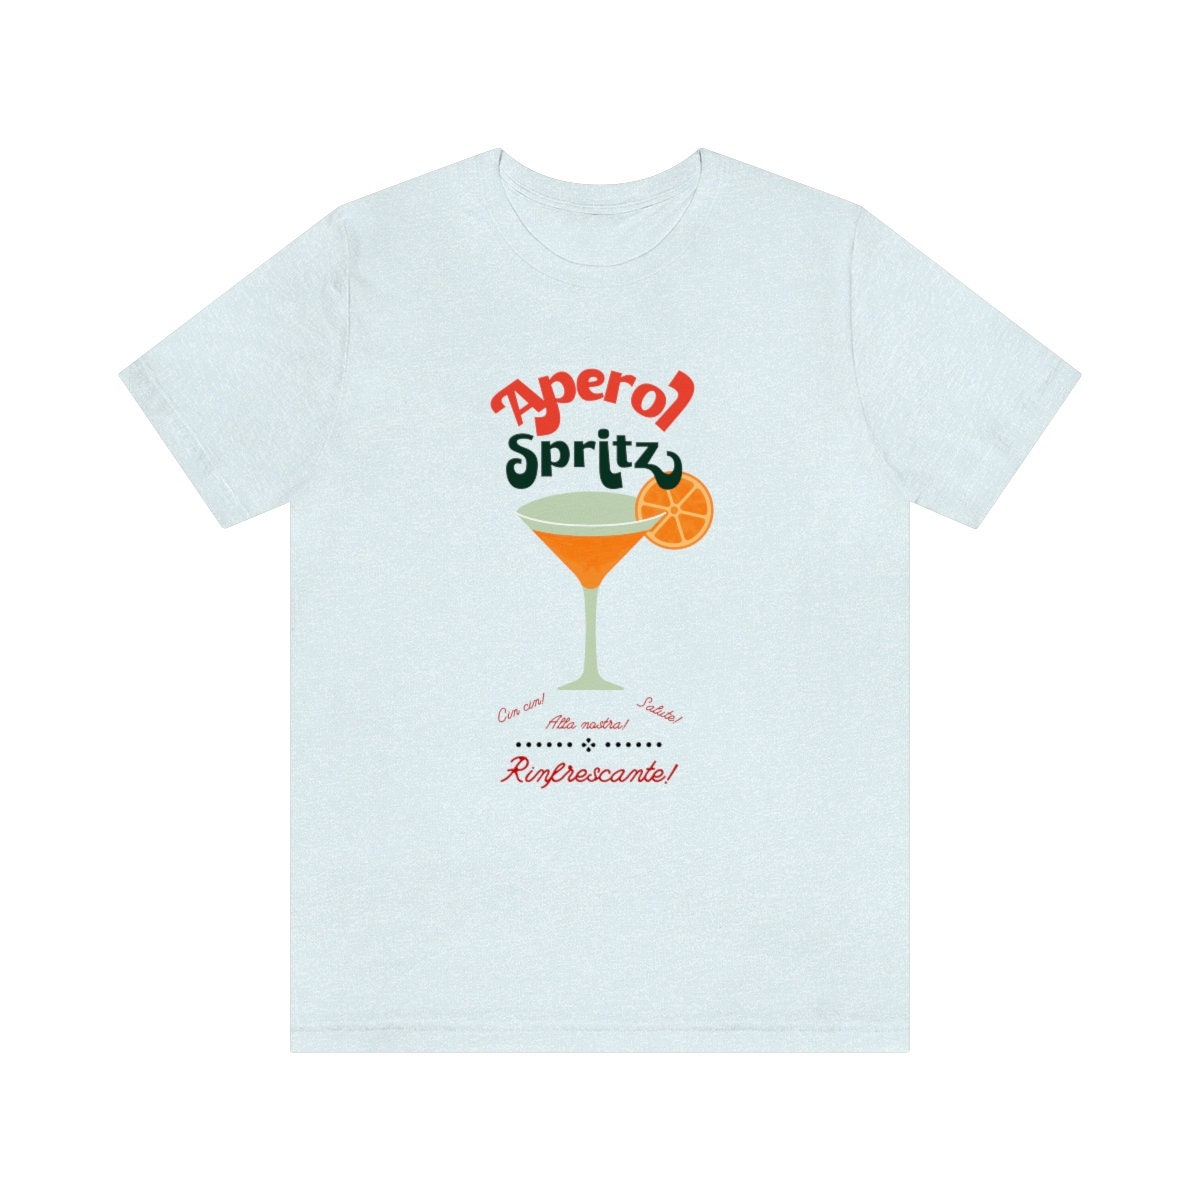 Discover Aperol Spritz Tee, Italian drink t shirt, cocktail tee